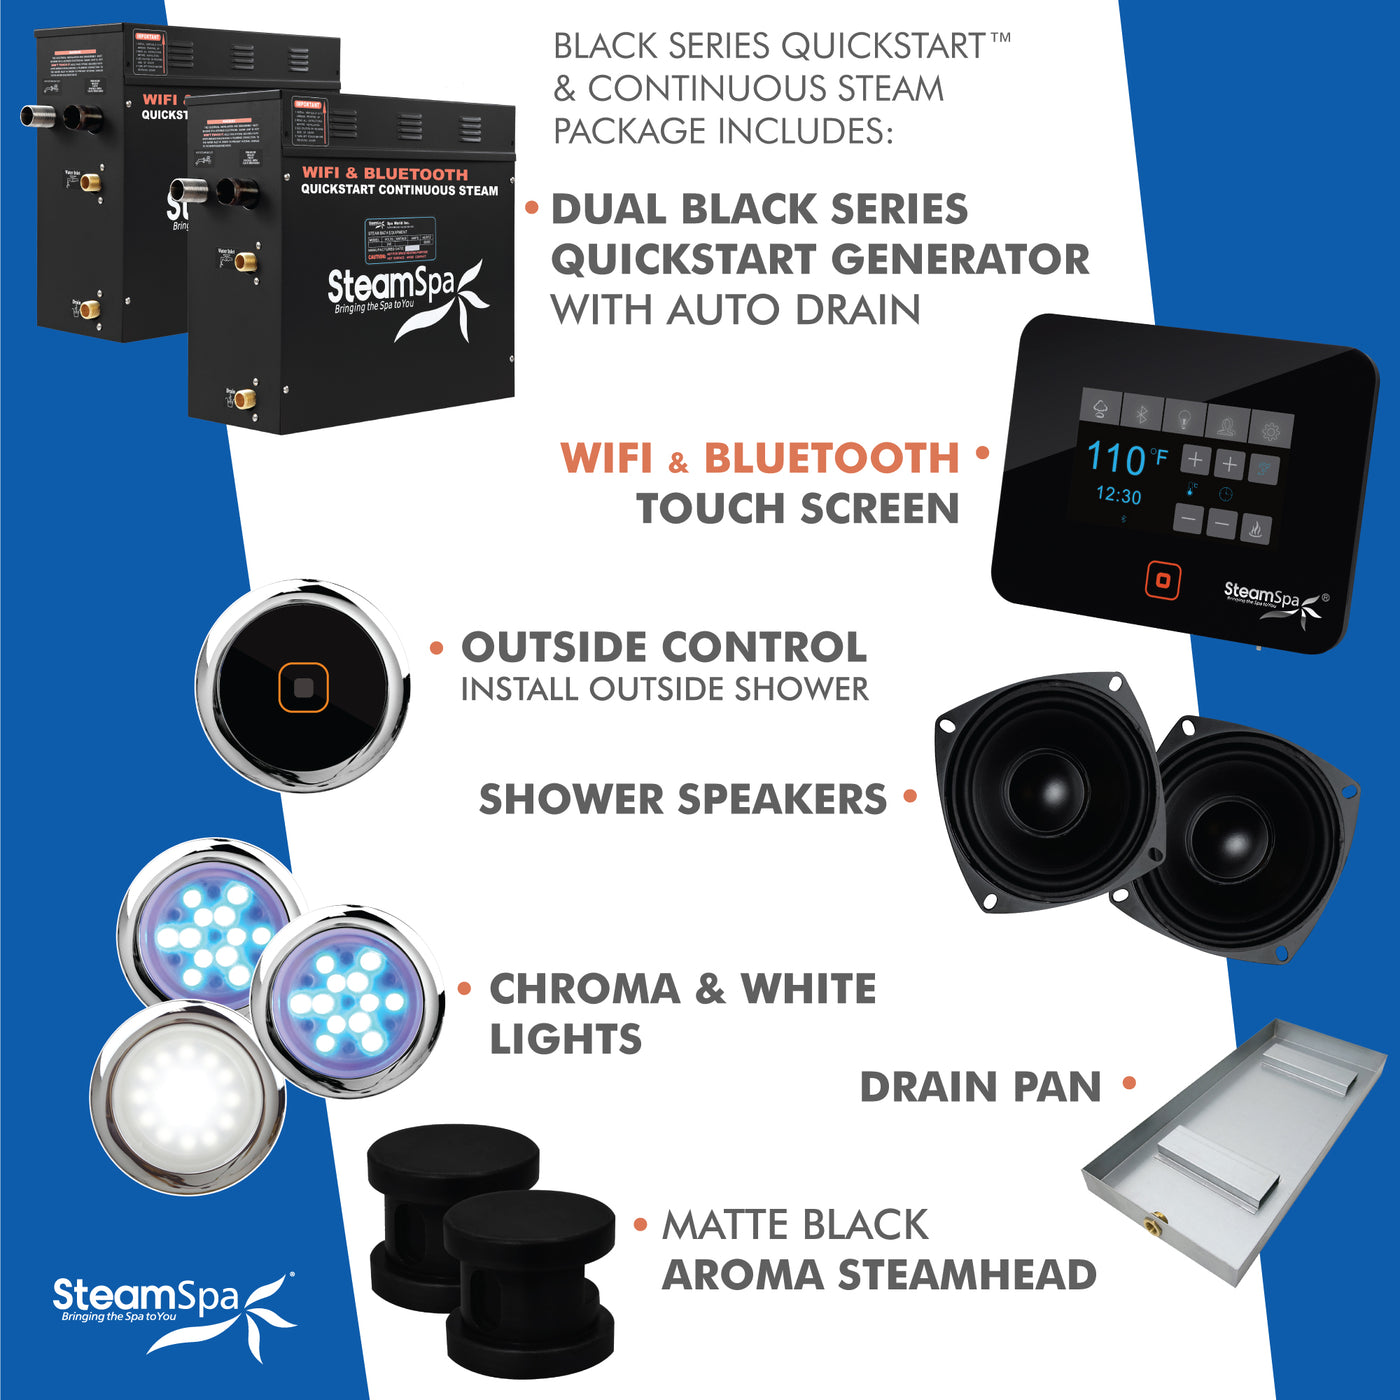 Black Series WiFi and Bluetooth 2 x 7.5kW QuickStart Steam Bath Generator Package with Dual Aroma Pump in Matte Black BKT1500MK-ADP